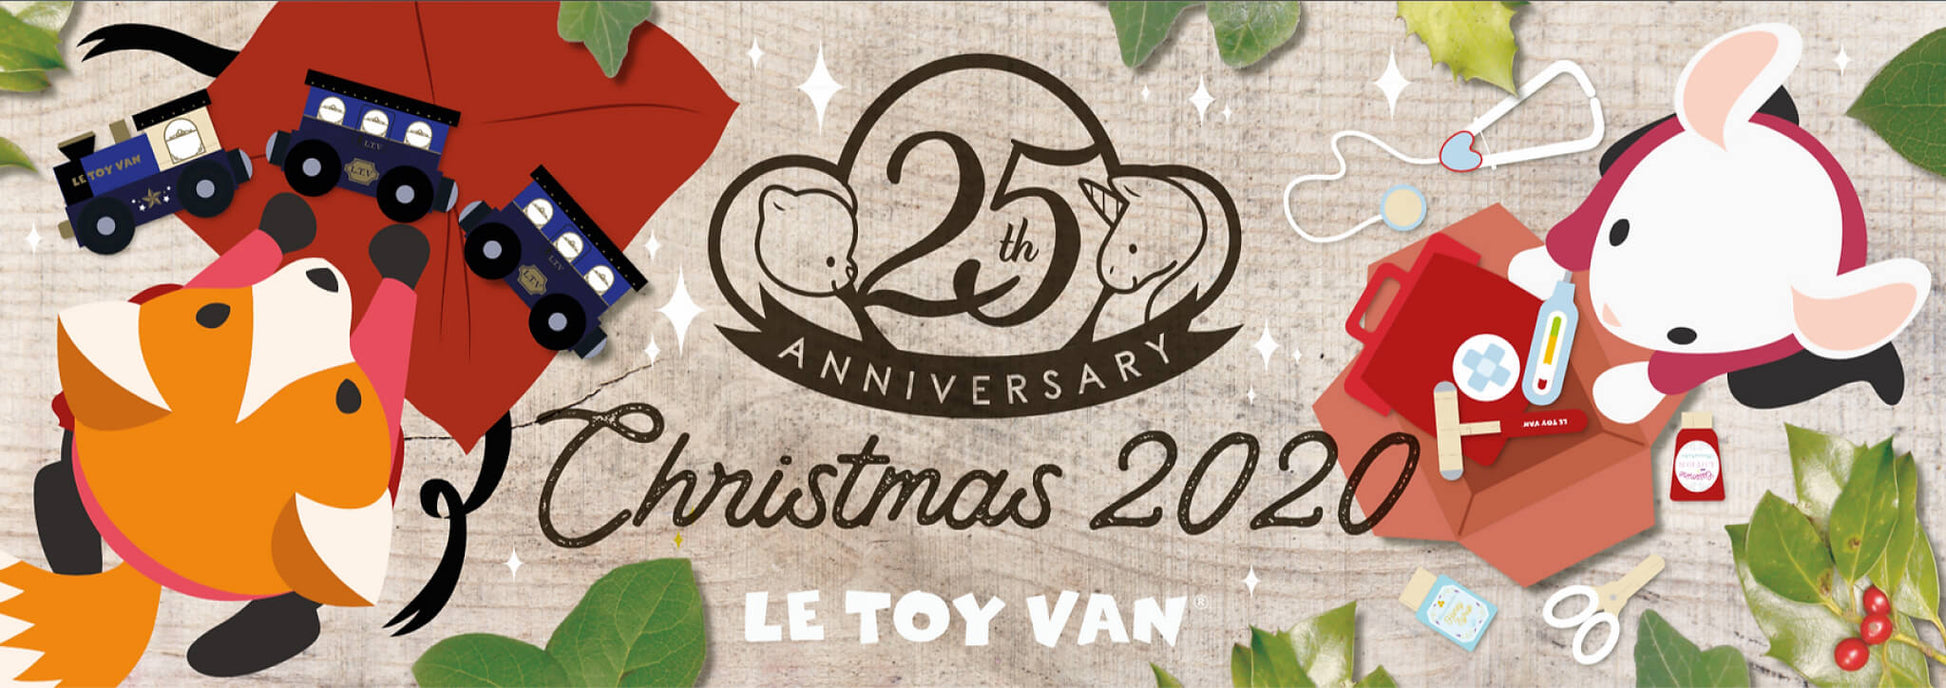 Studio Méïzou - Bannière Le Toy Van 2